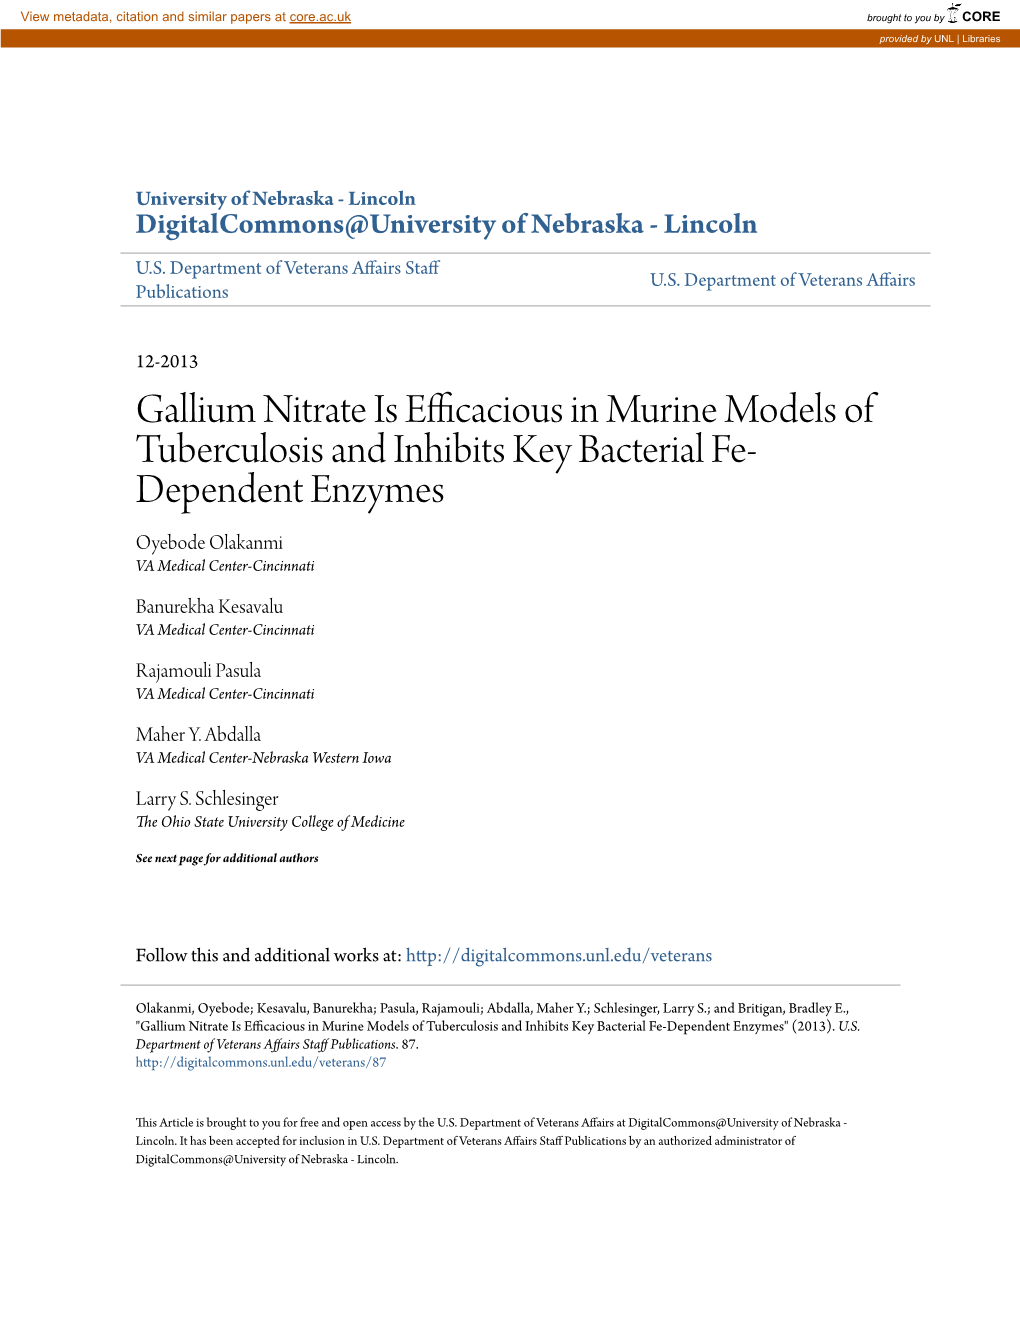 Gallium Nitrate Is Efficacious in Murine Models of Tuberculosis and Inhibits Key Bacterial Fe- Dependent Enzymes Oyebode Olakanmi VA Medical Center-Cincinnati